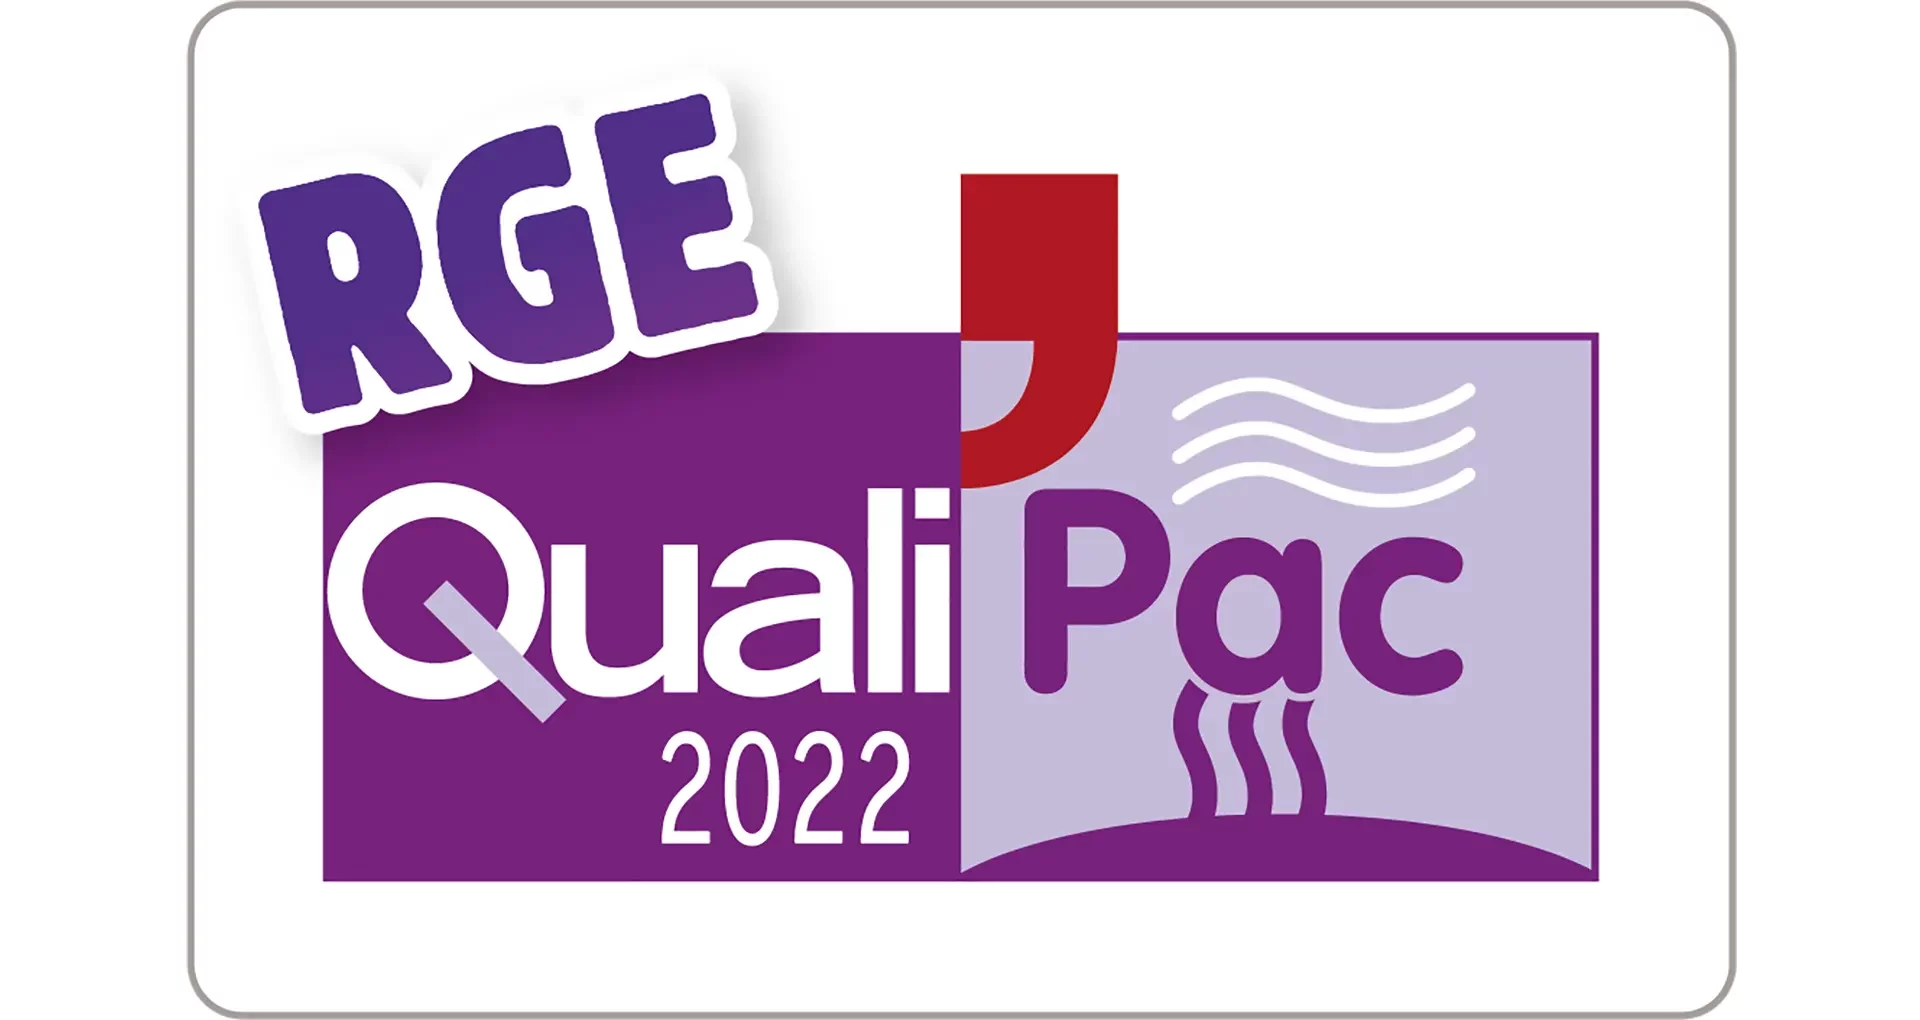 10096_logo-QualiPAC-2022-RGE-png